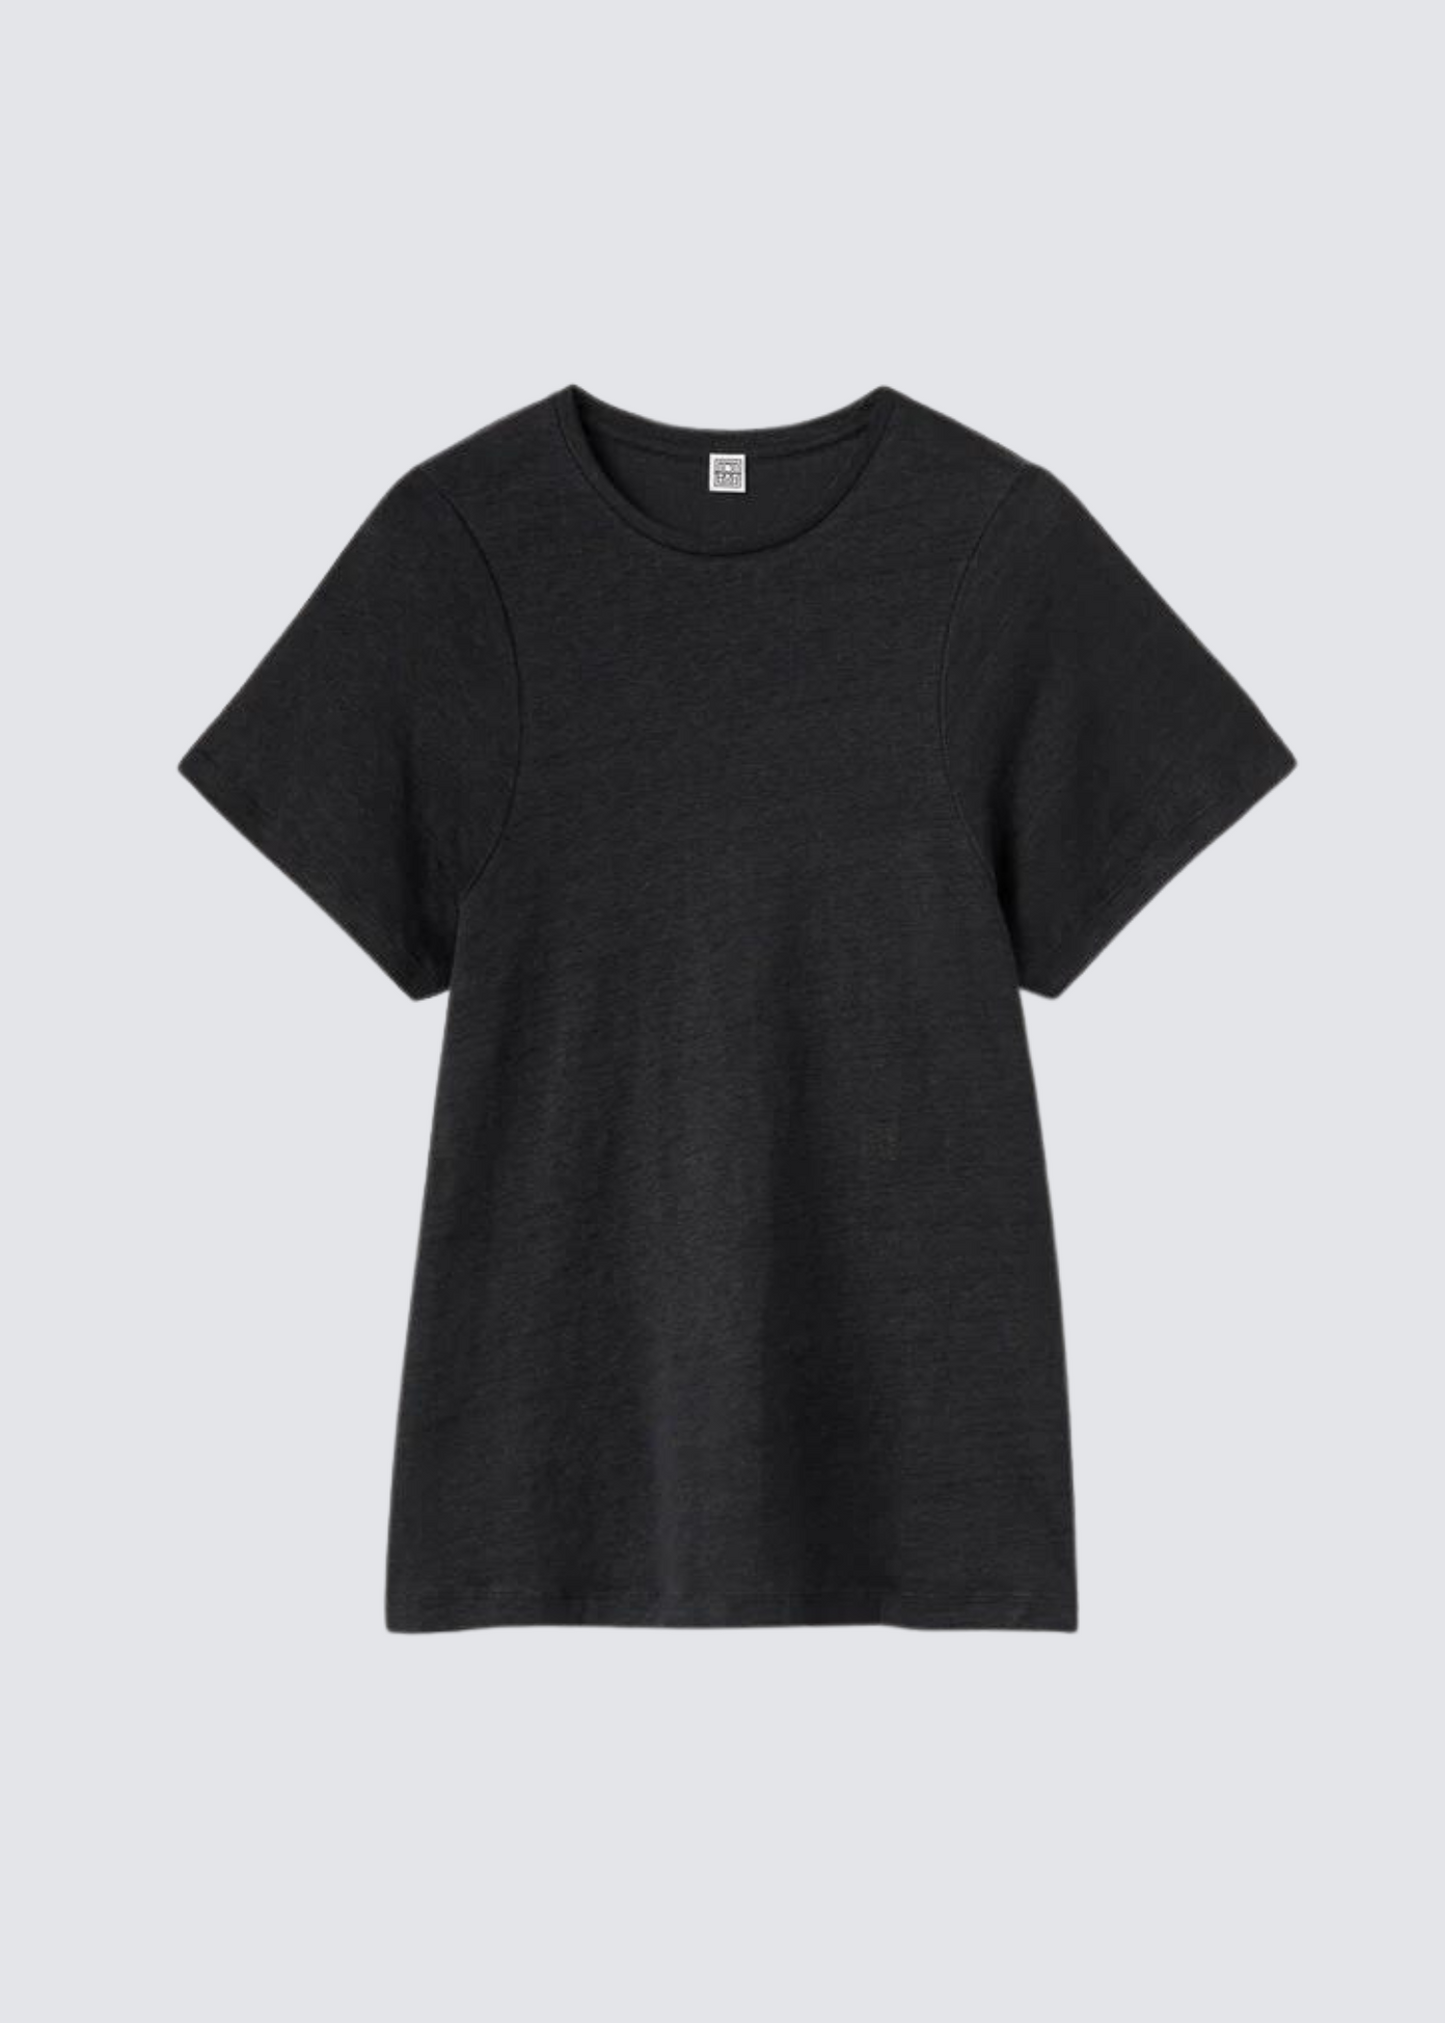 Curved Seam Linen Tee, Black, T-Shirt